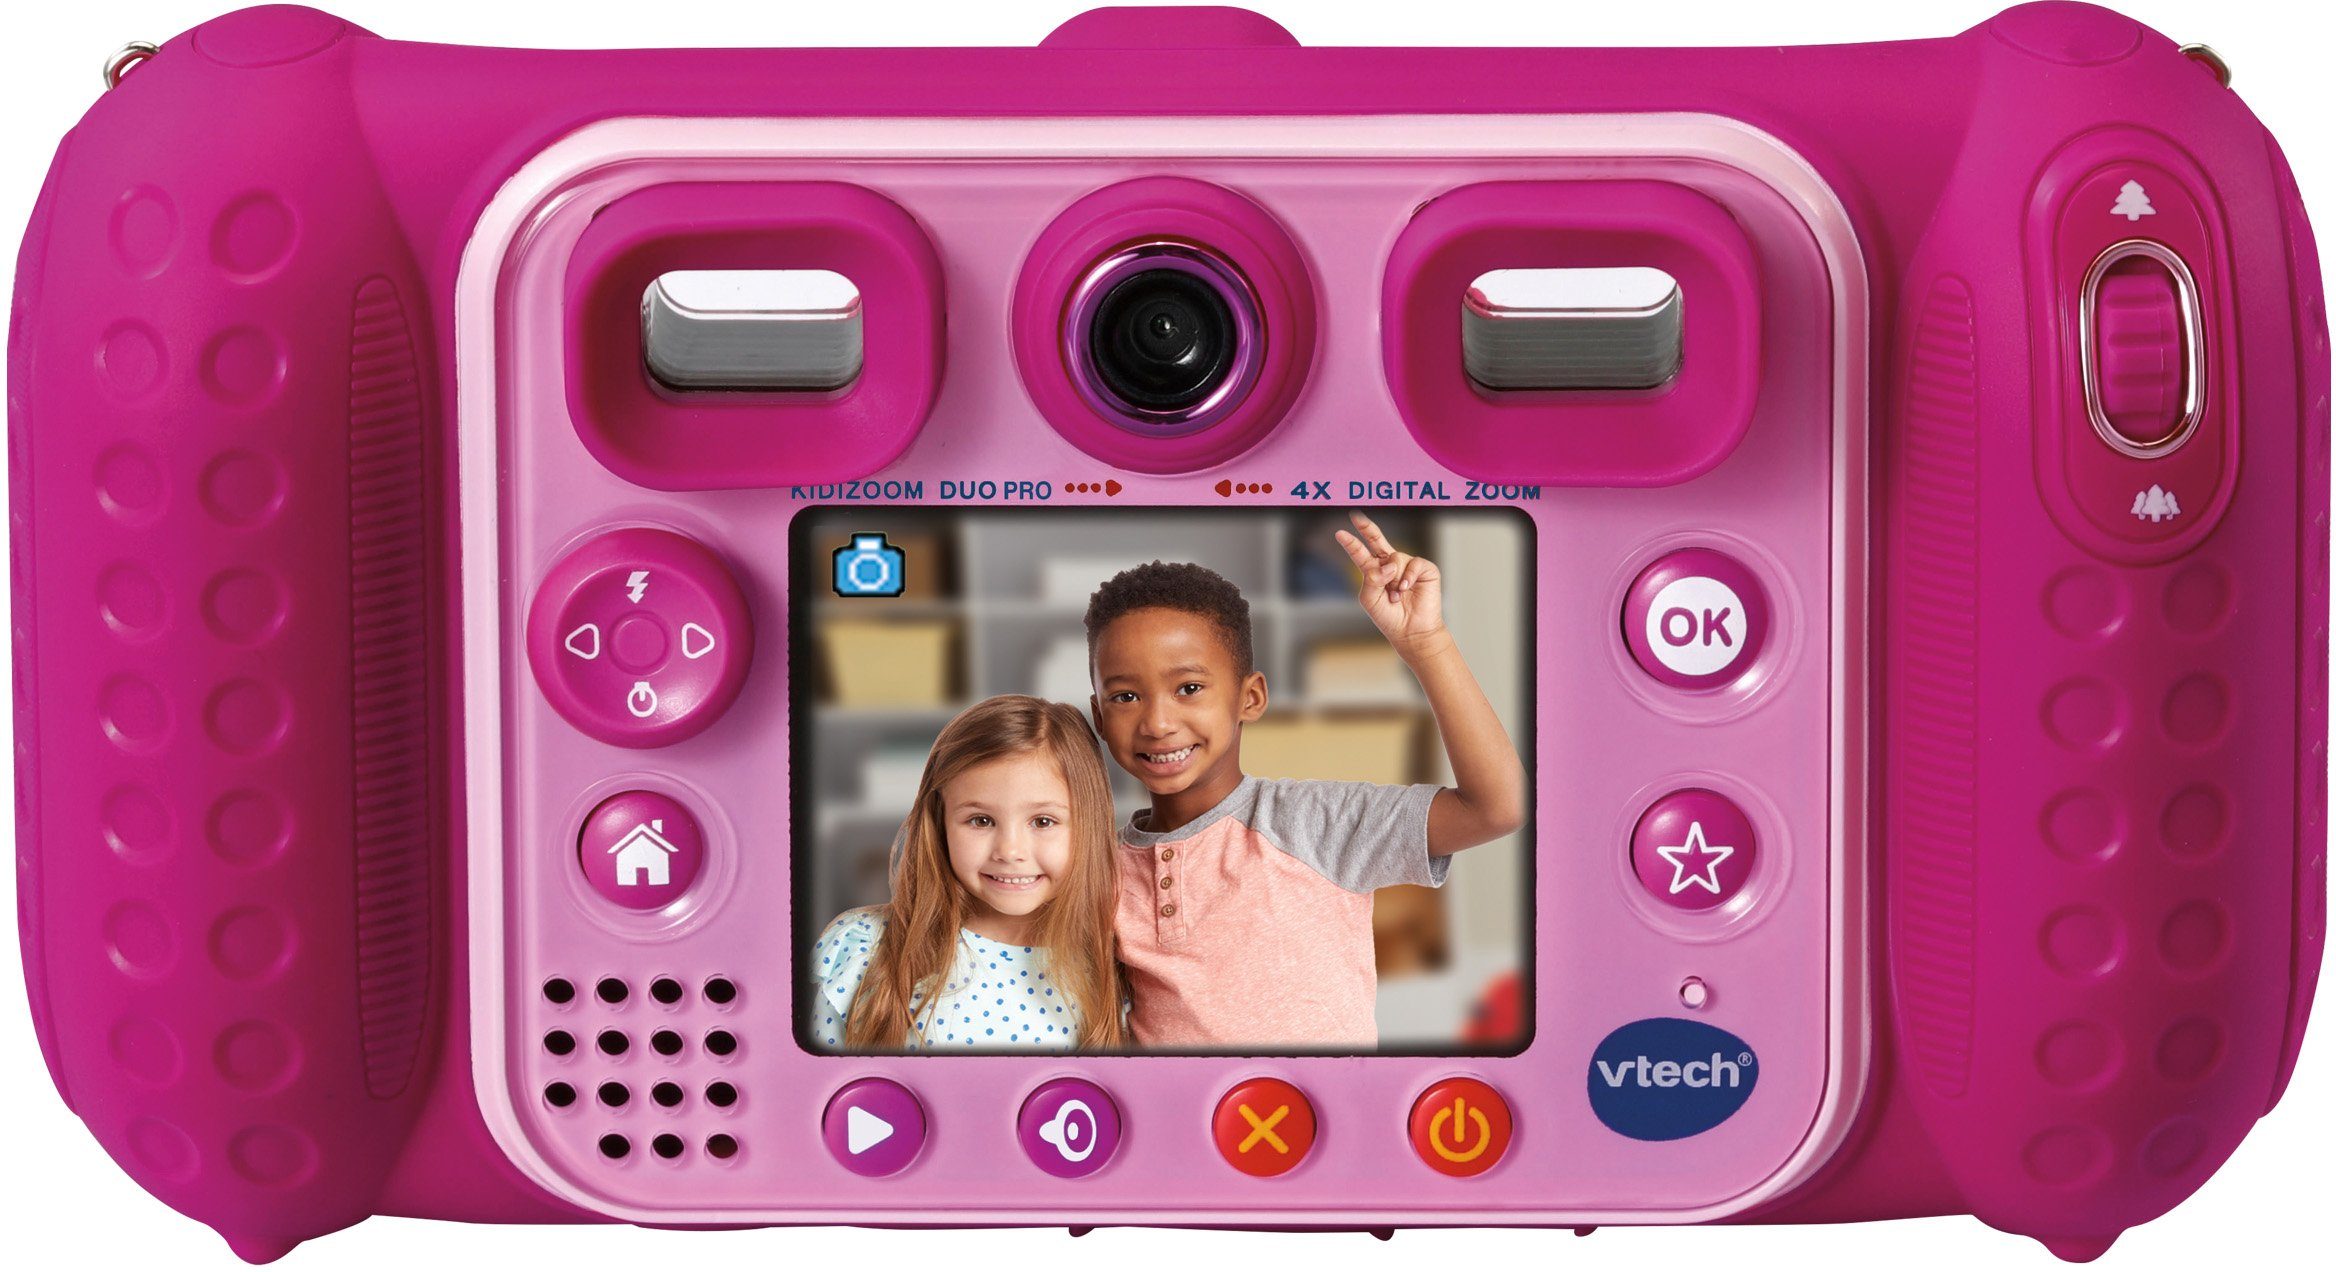 Kopfhörer) Kinderkamera Pro Vtech® (inkluisve Duo pink KidiZoom